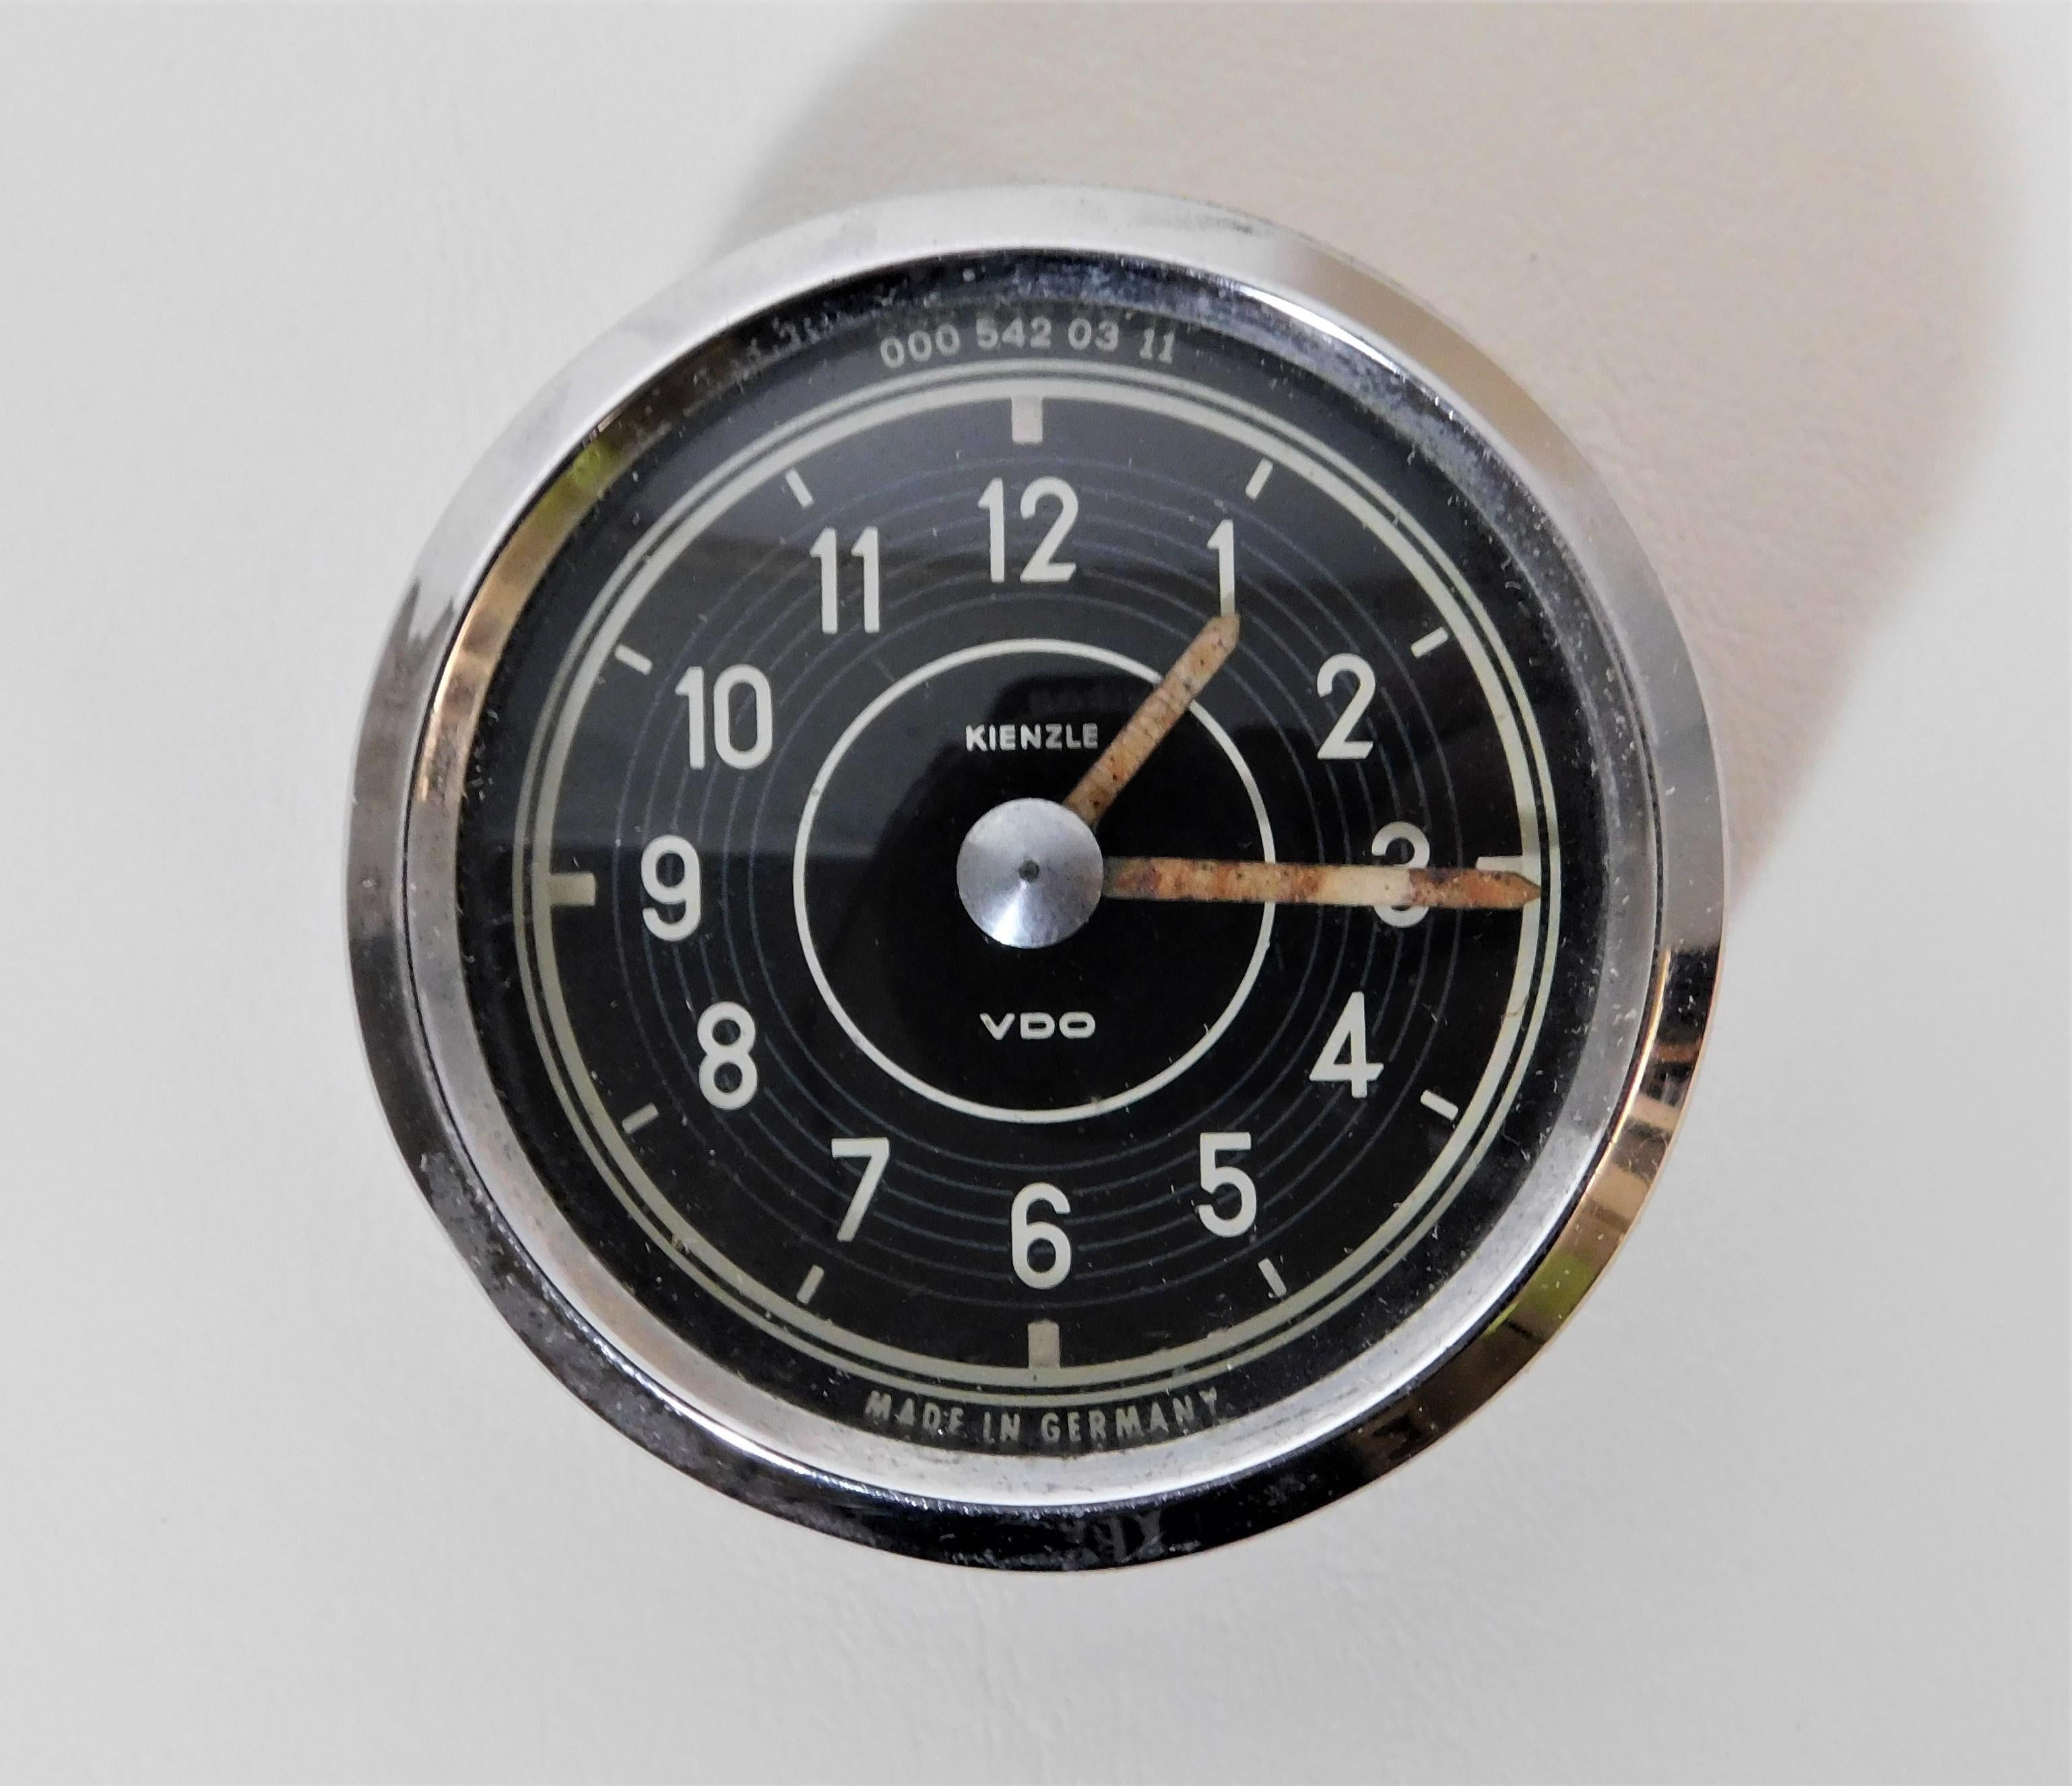 Made in Germany Kienzle VDO dash clock W121 190sl. Fits Mercedes-Benz models from 1955, 1956, 1957, 1958, 1959, 1960, 1961, 1962, 1963. Code model number on face 000542-03-11
Back says VDO Tachometer Werke Germany, Five 5 Jewels unadjusted.